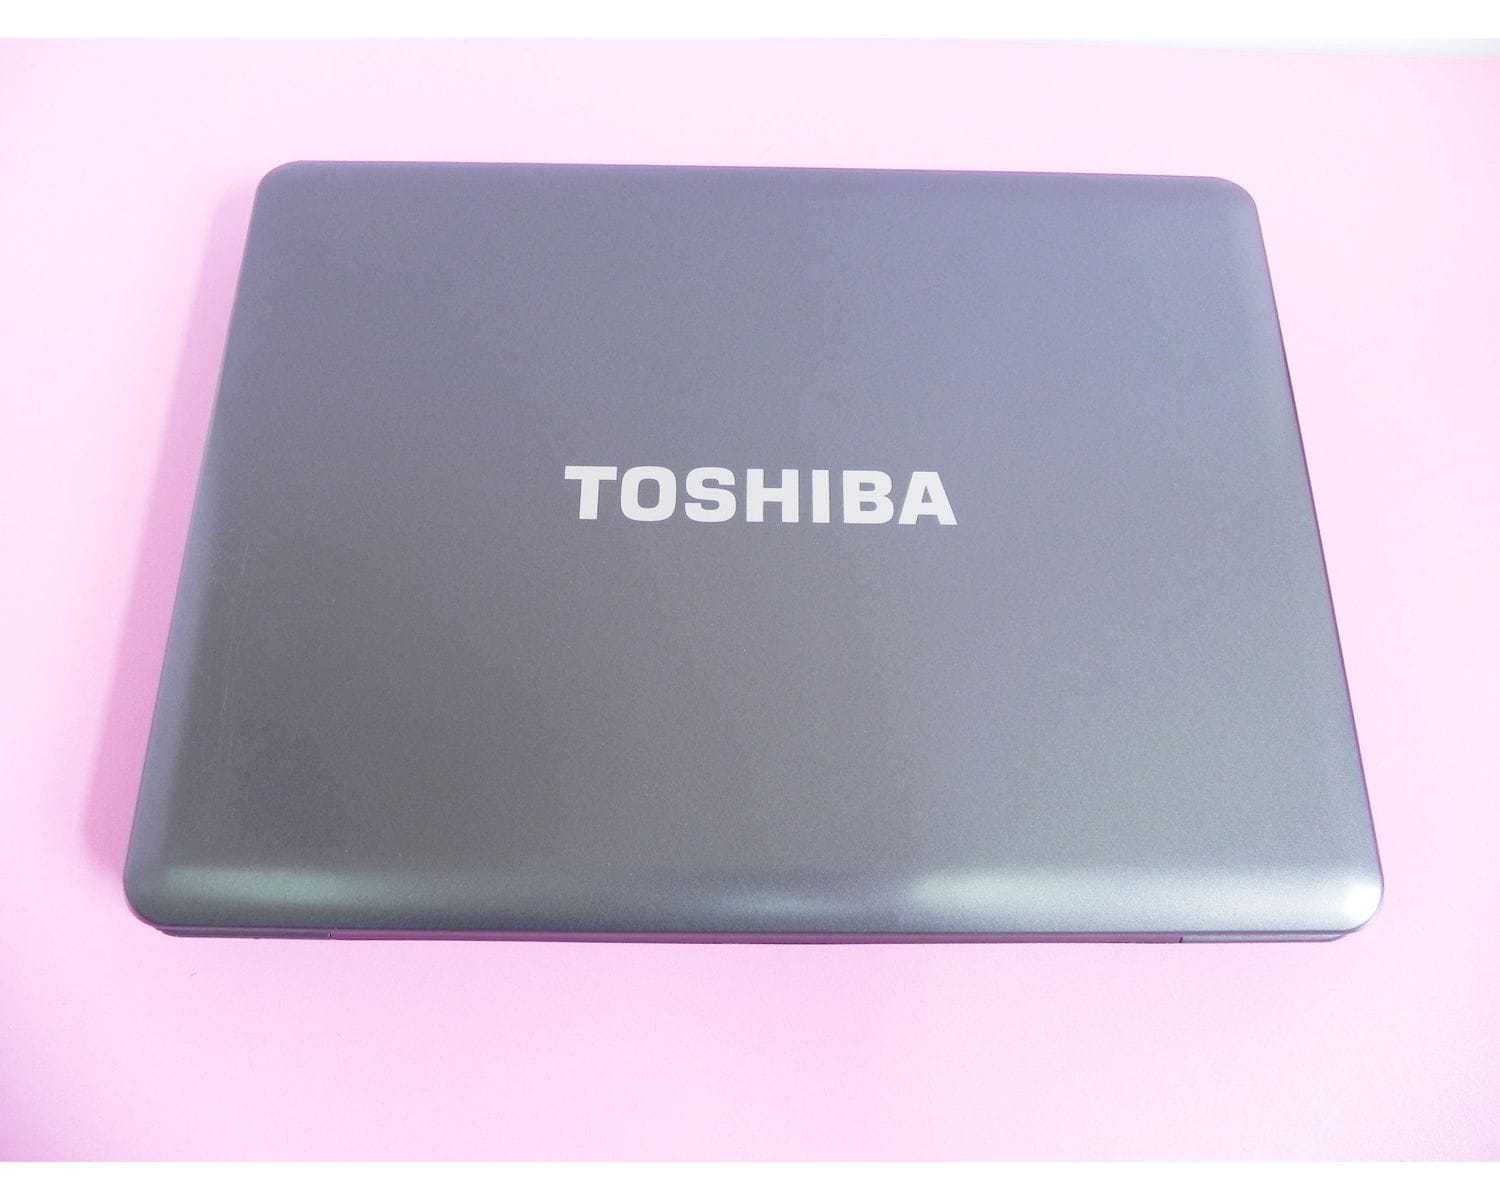 Ноутбук Toshiba Satellite A300d Цена